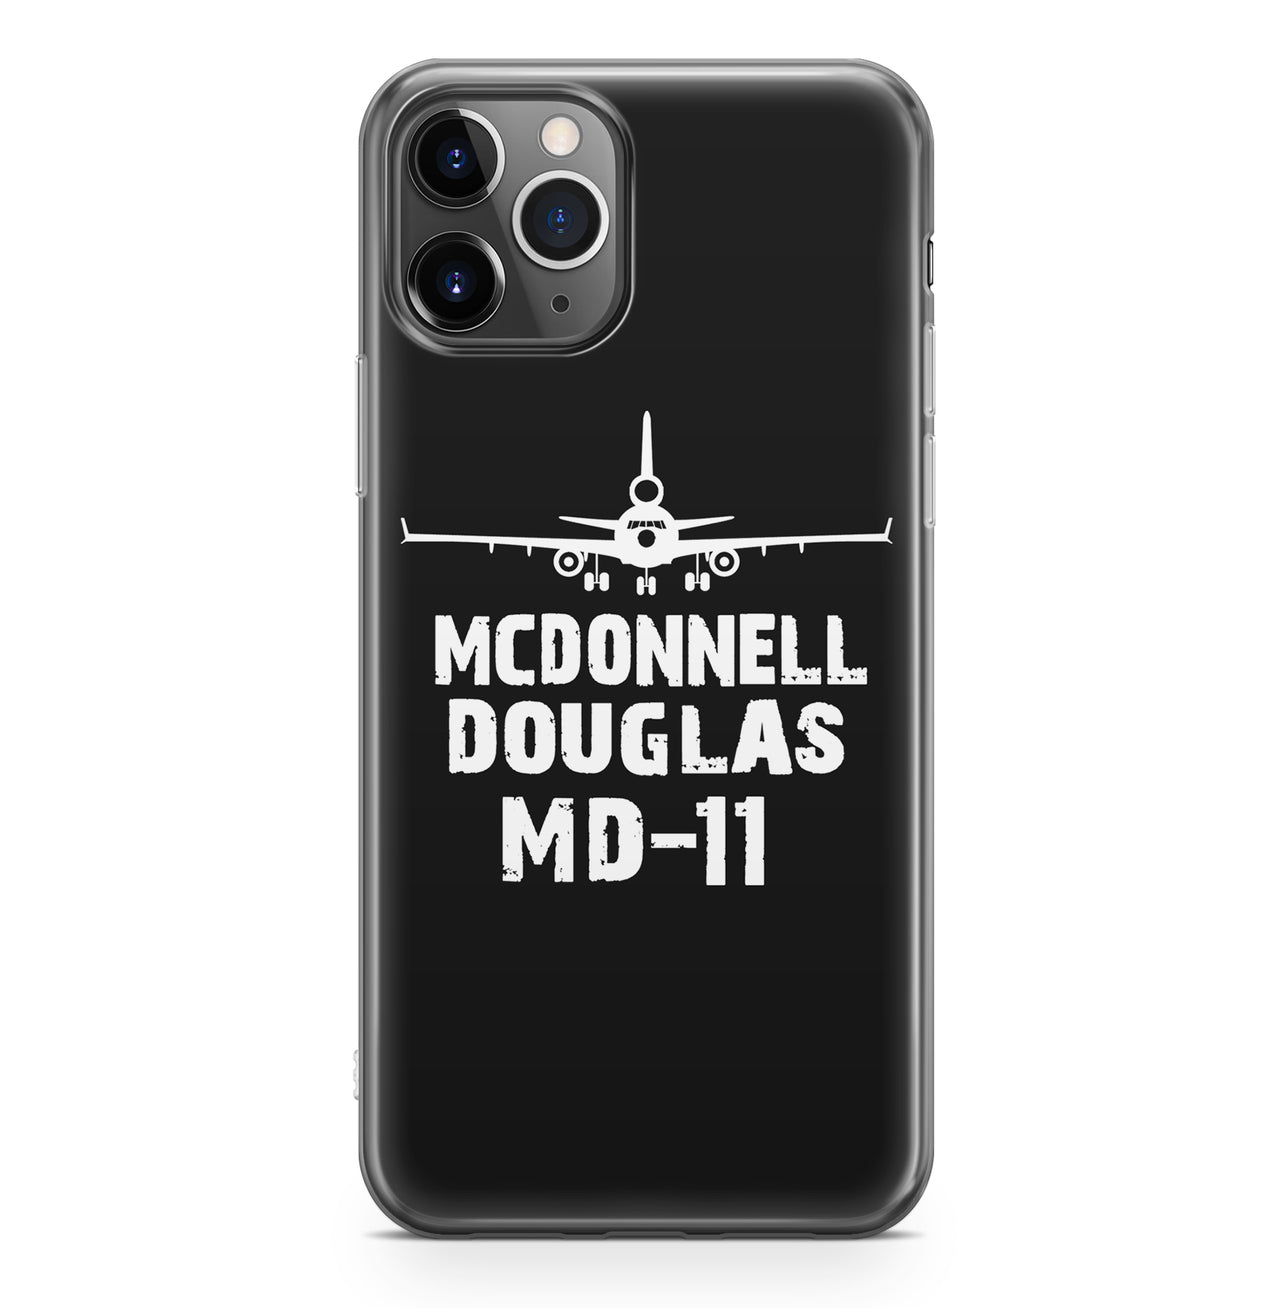 McDonnell Douglas MD-11 & Plane Designed iPhone Cases